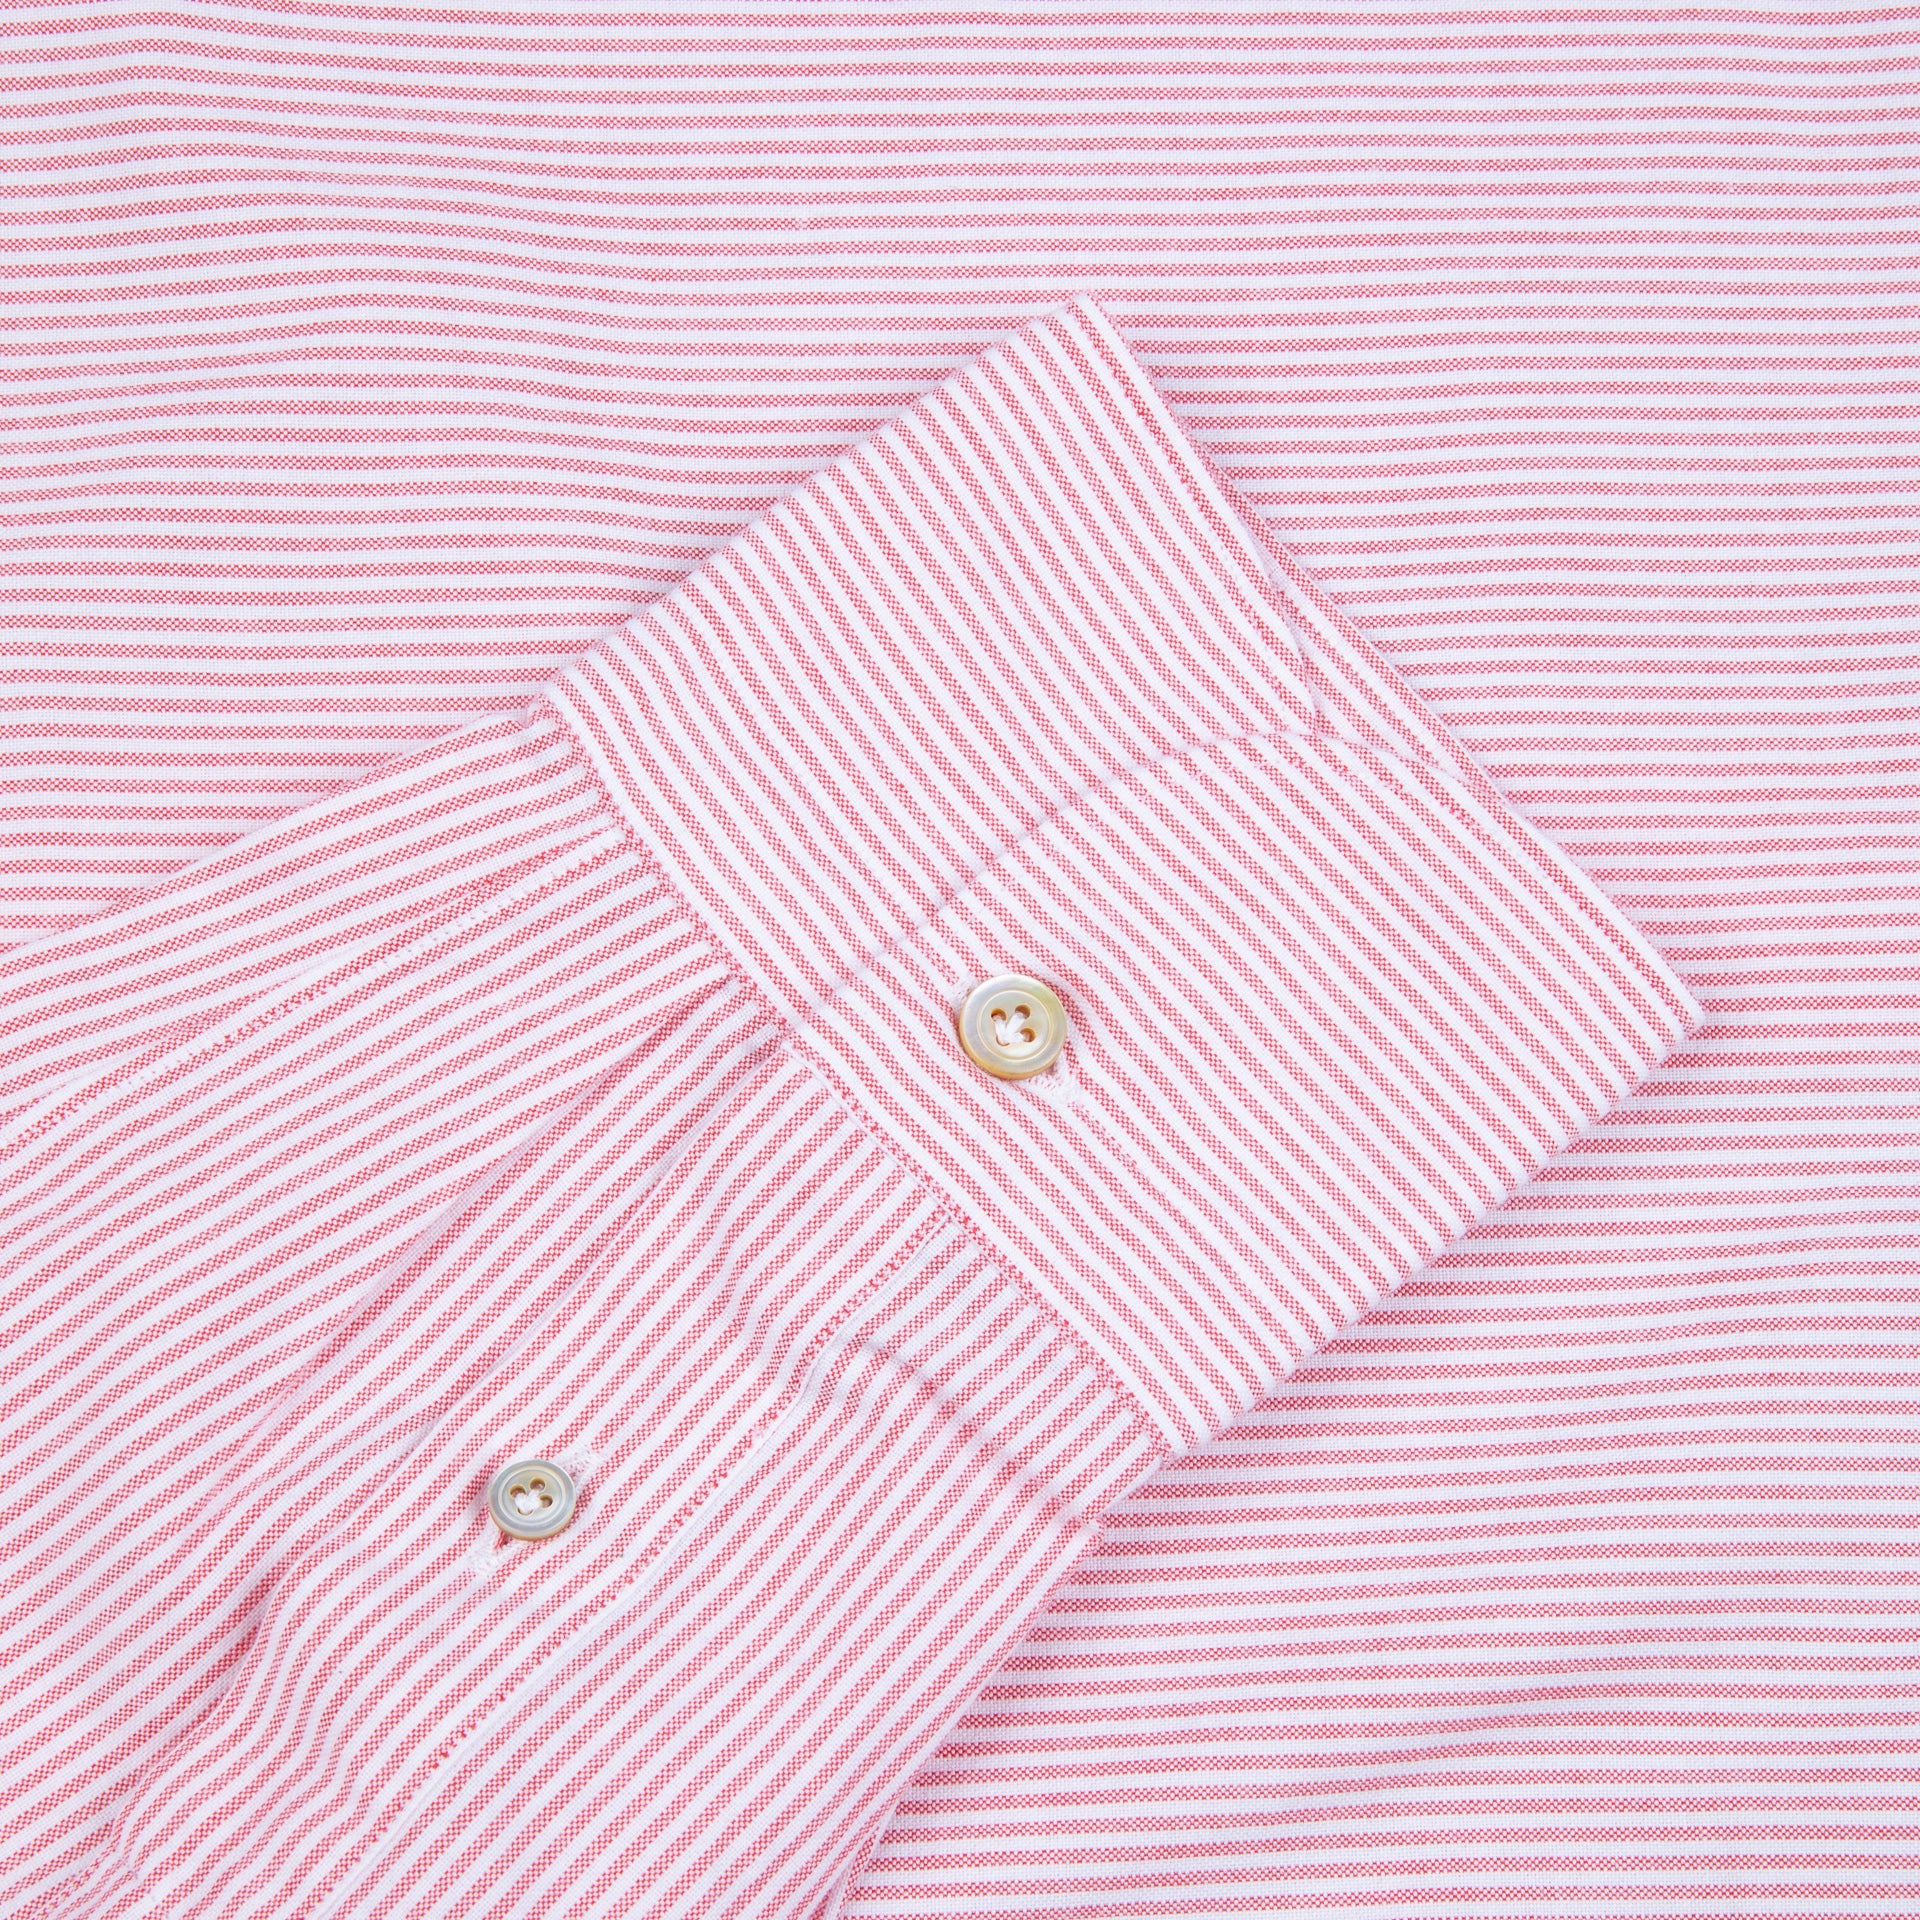 Finamore Gaeta Shirt Pinpoint Oxford Sergio Collar Pink Stripe